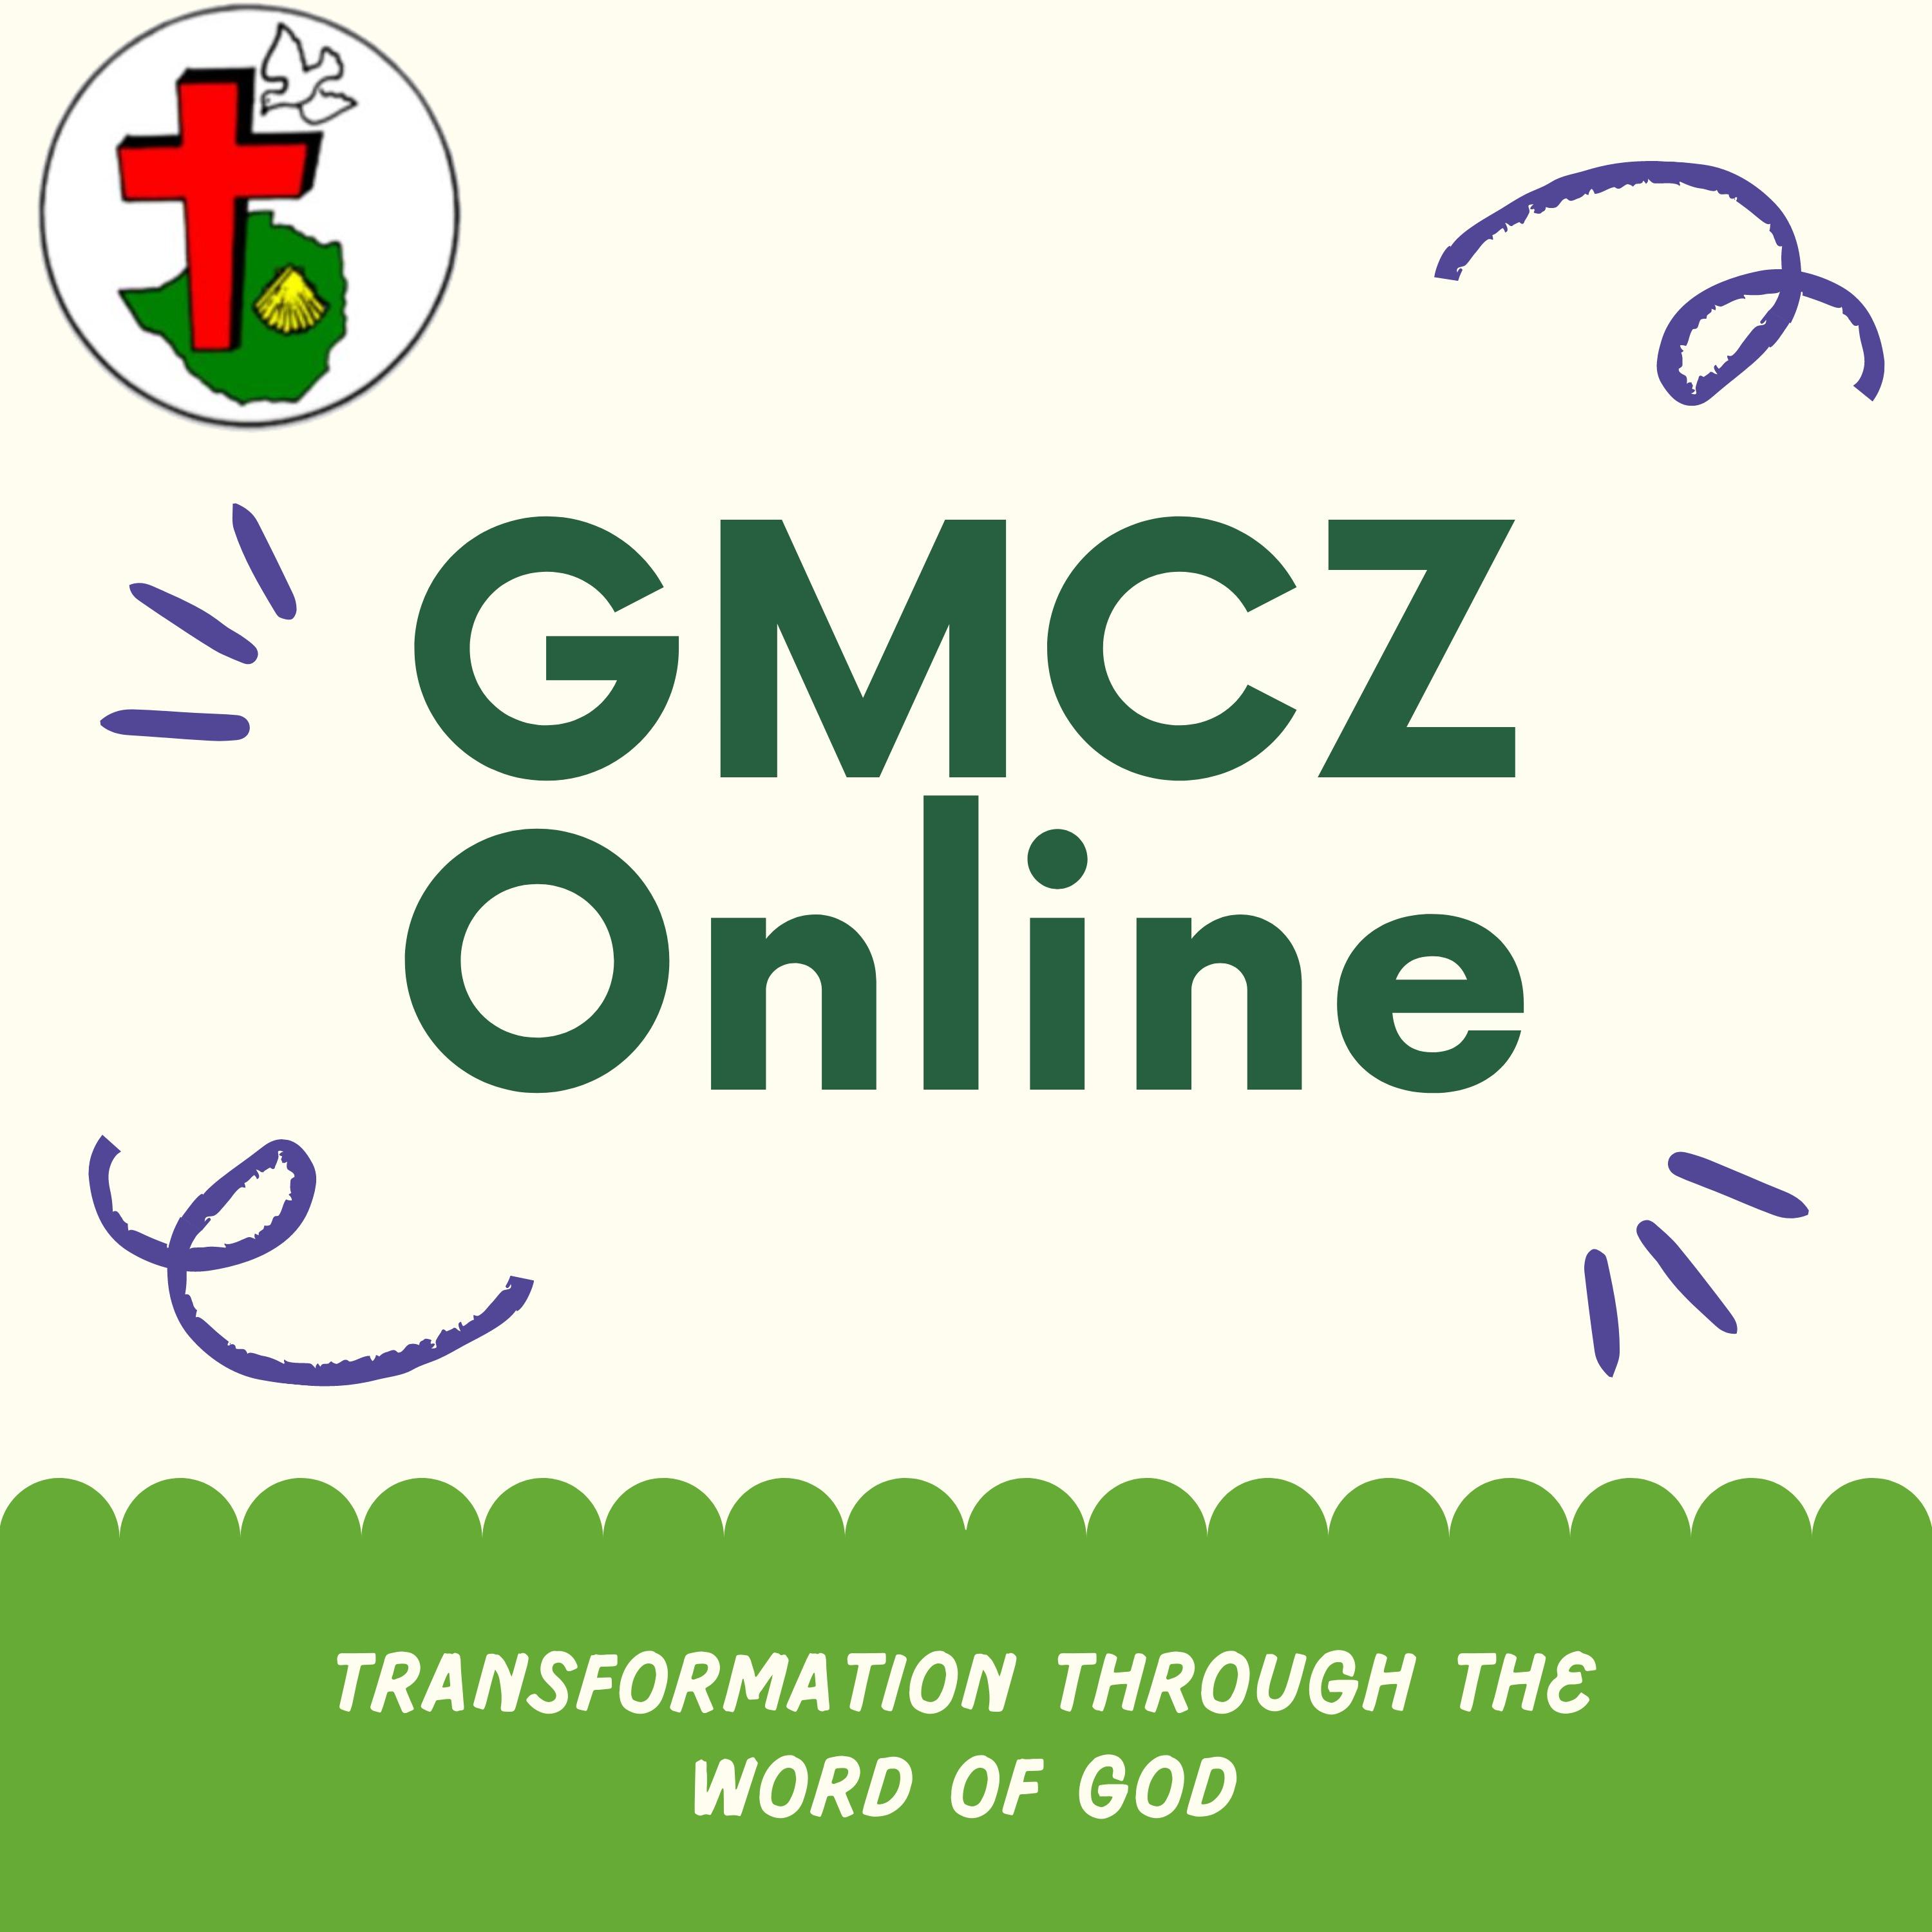 GMCZ Online